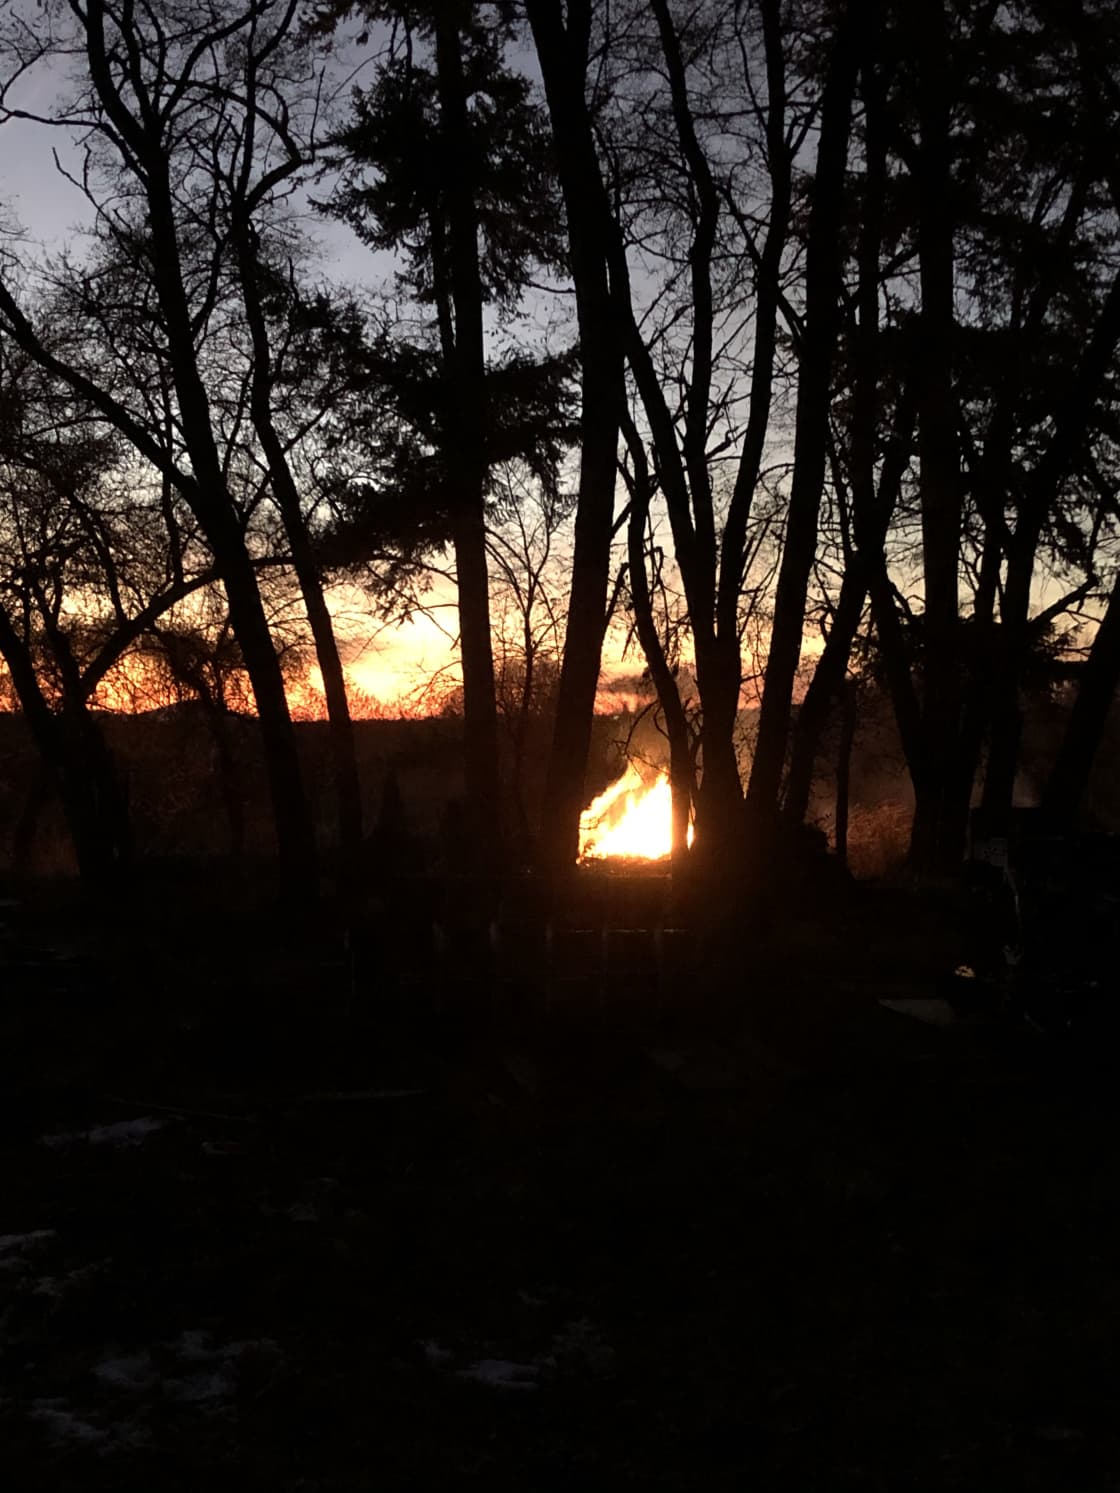 A fire at sunset.